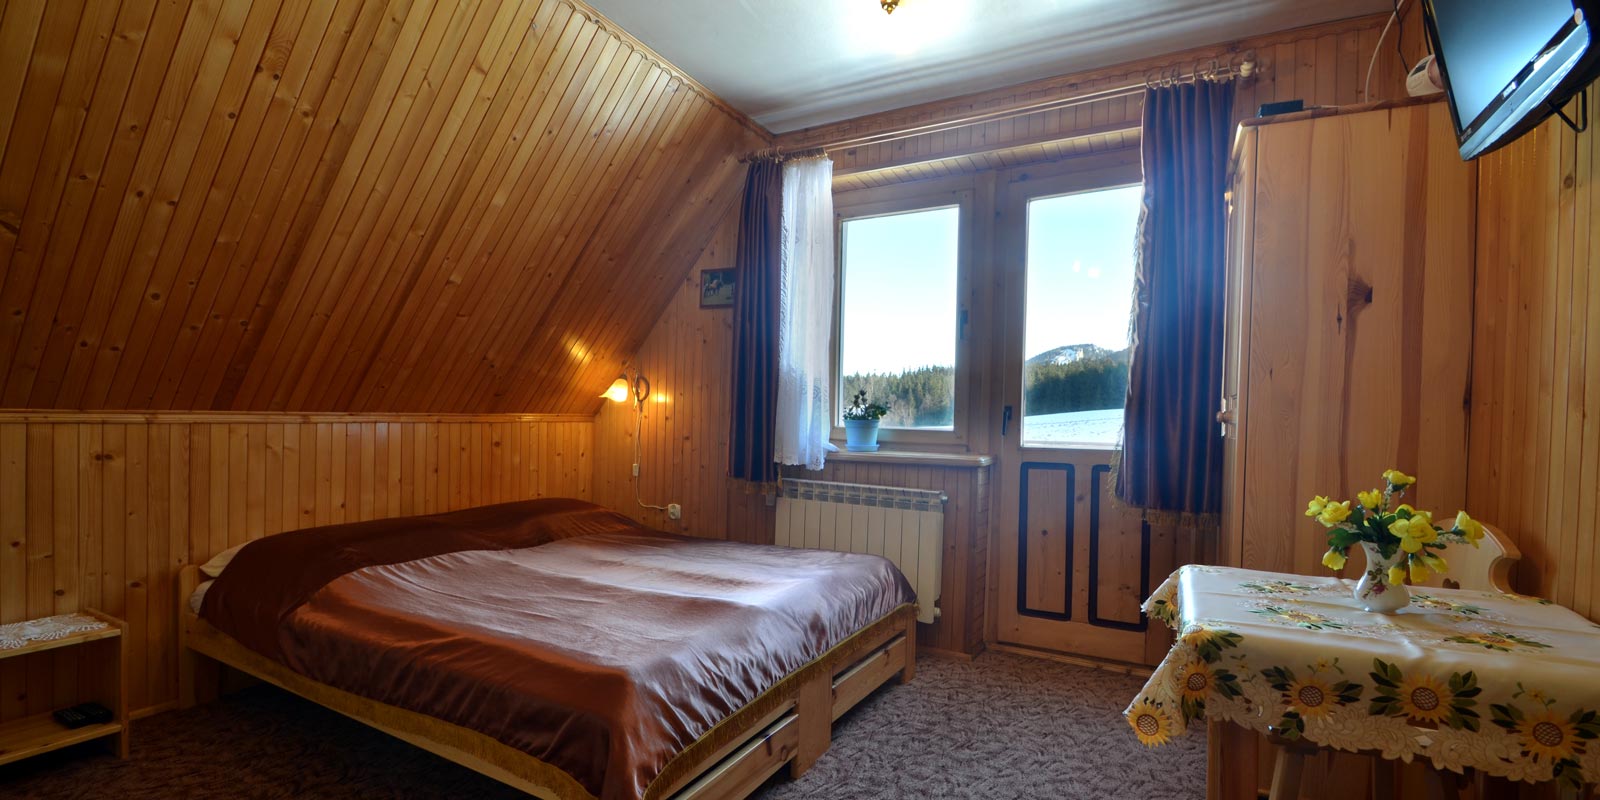 U LISA villa in Zakopane rooms for rent Poland Tatra Mountains 05